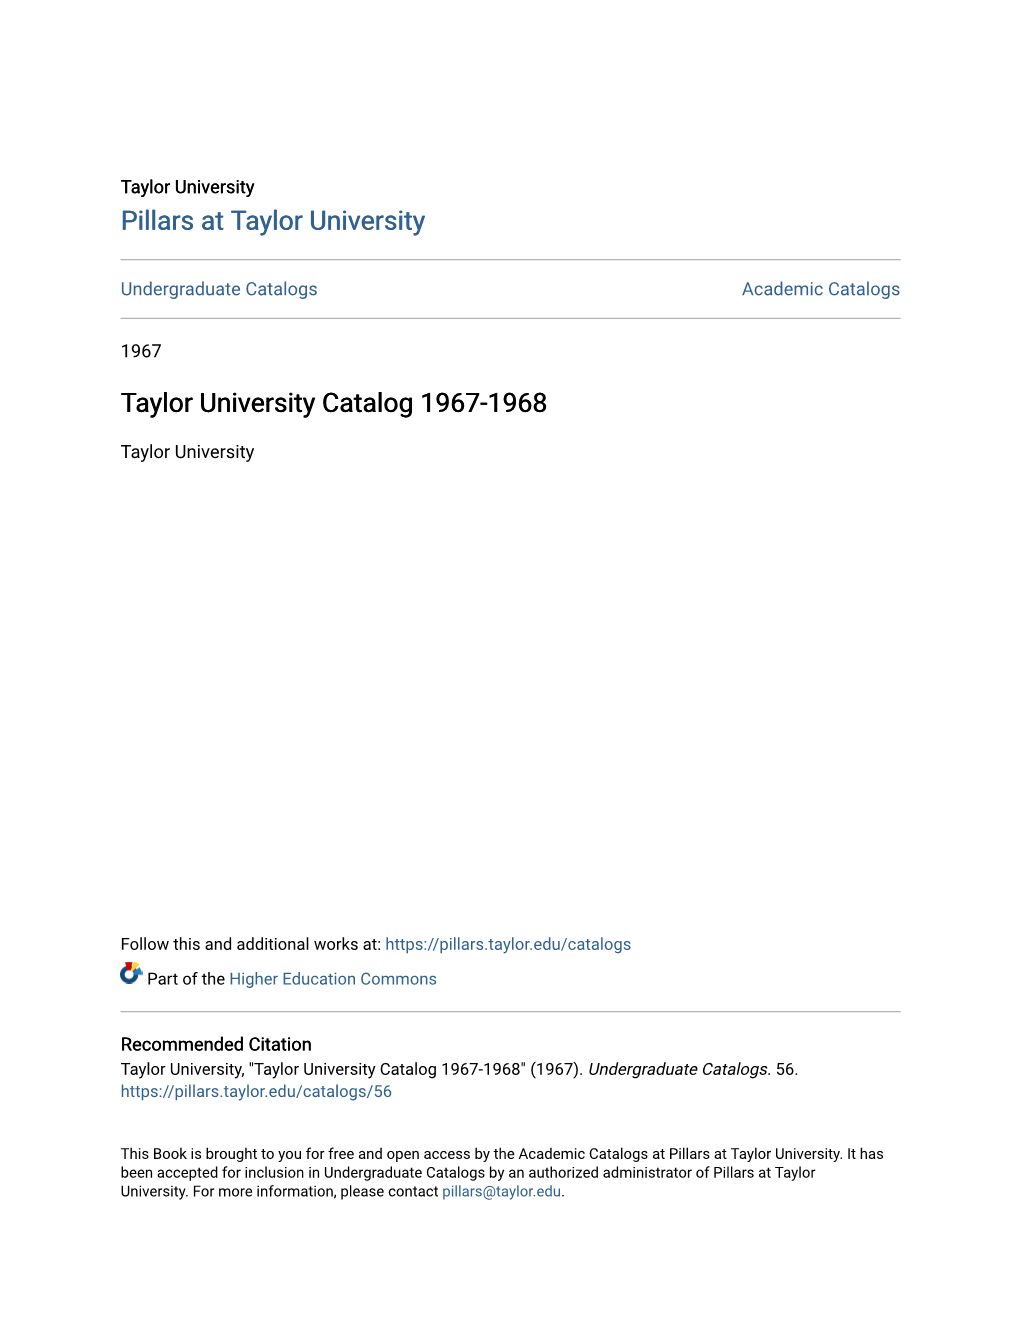 Taylor University Catalog 1967-1968